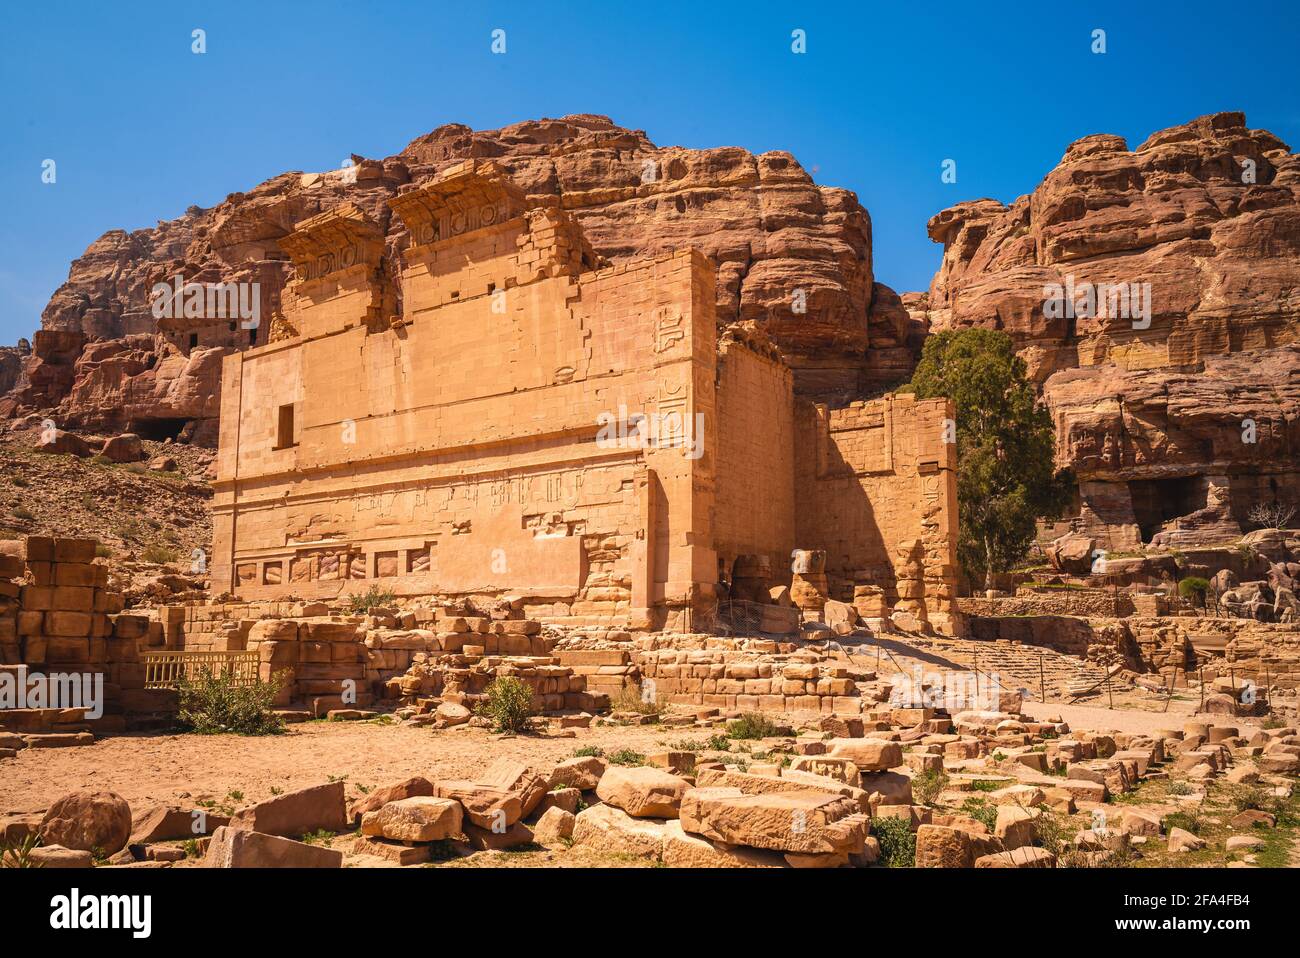 The Temple of Qasr Al Bint in petra, jordan Stock Photo